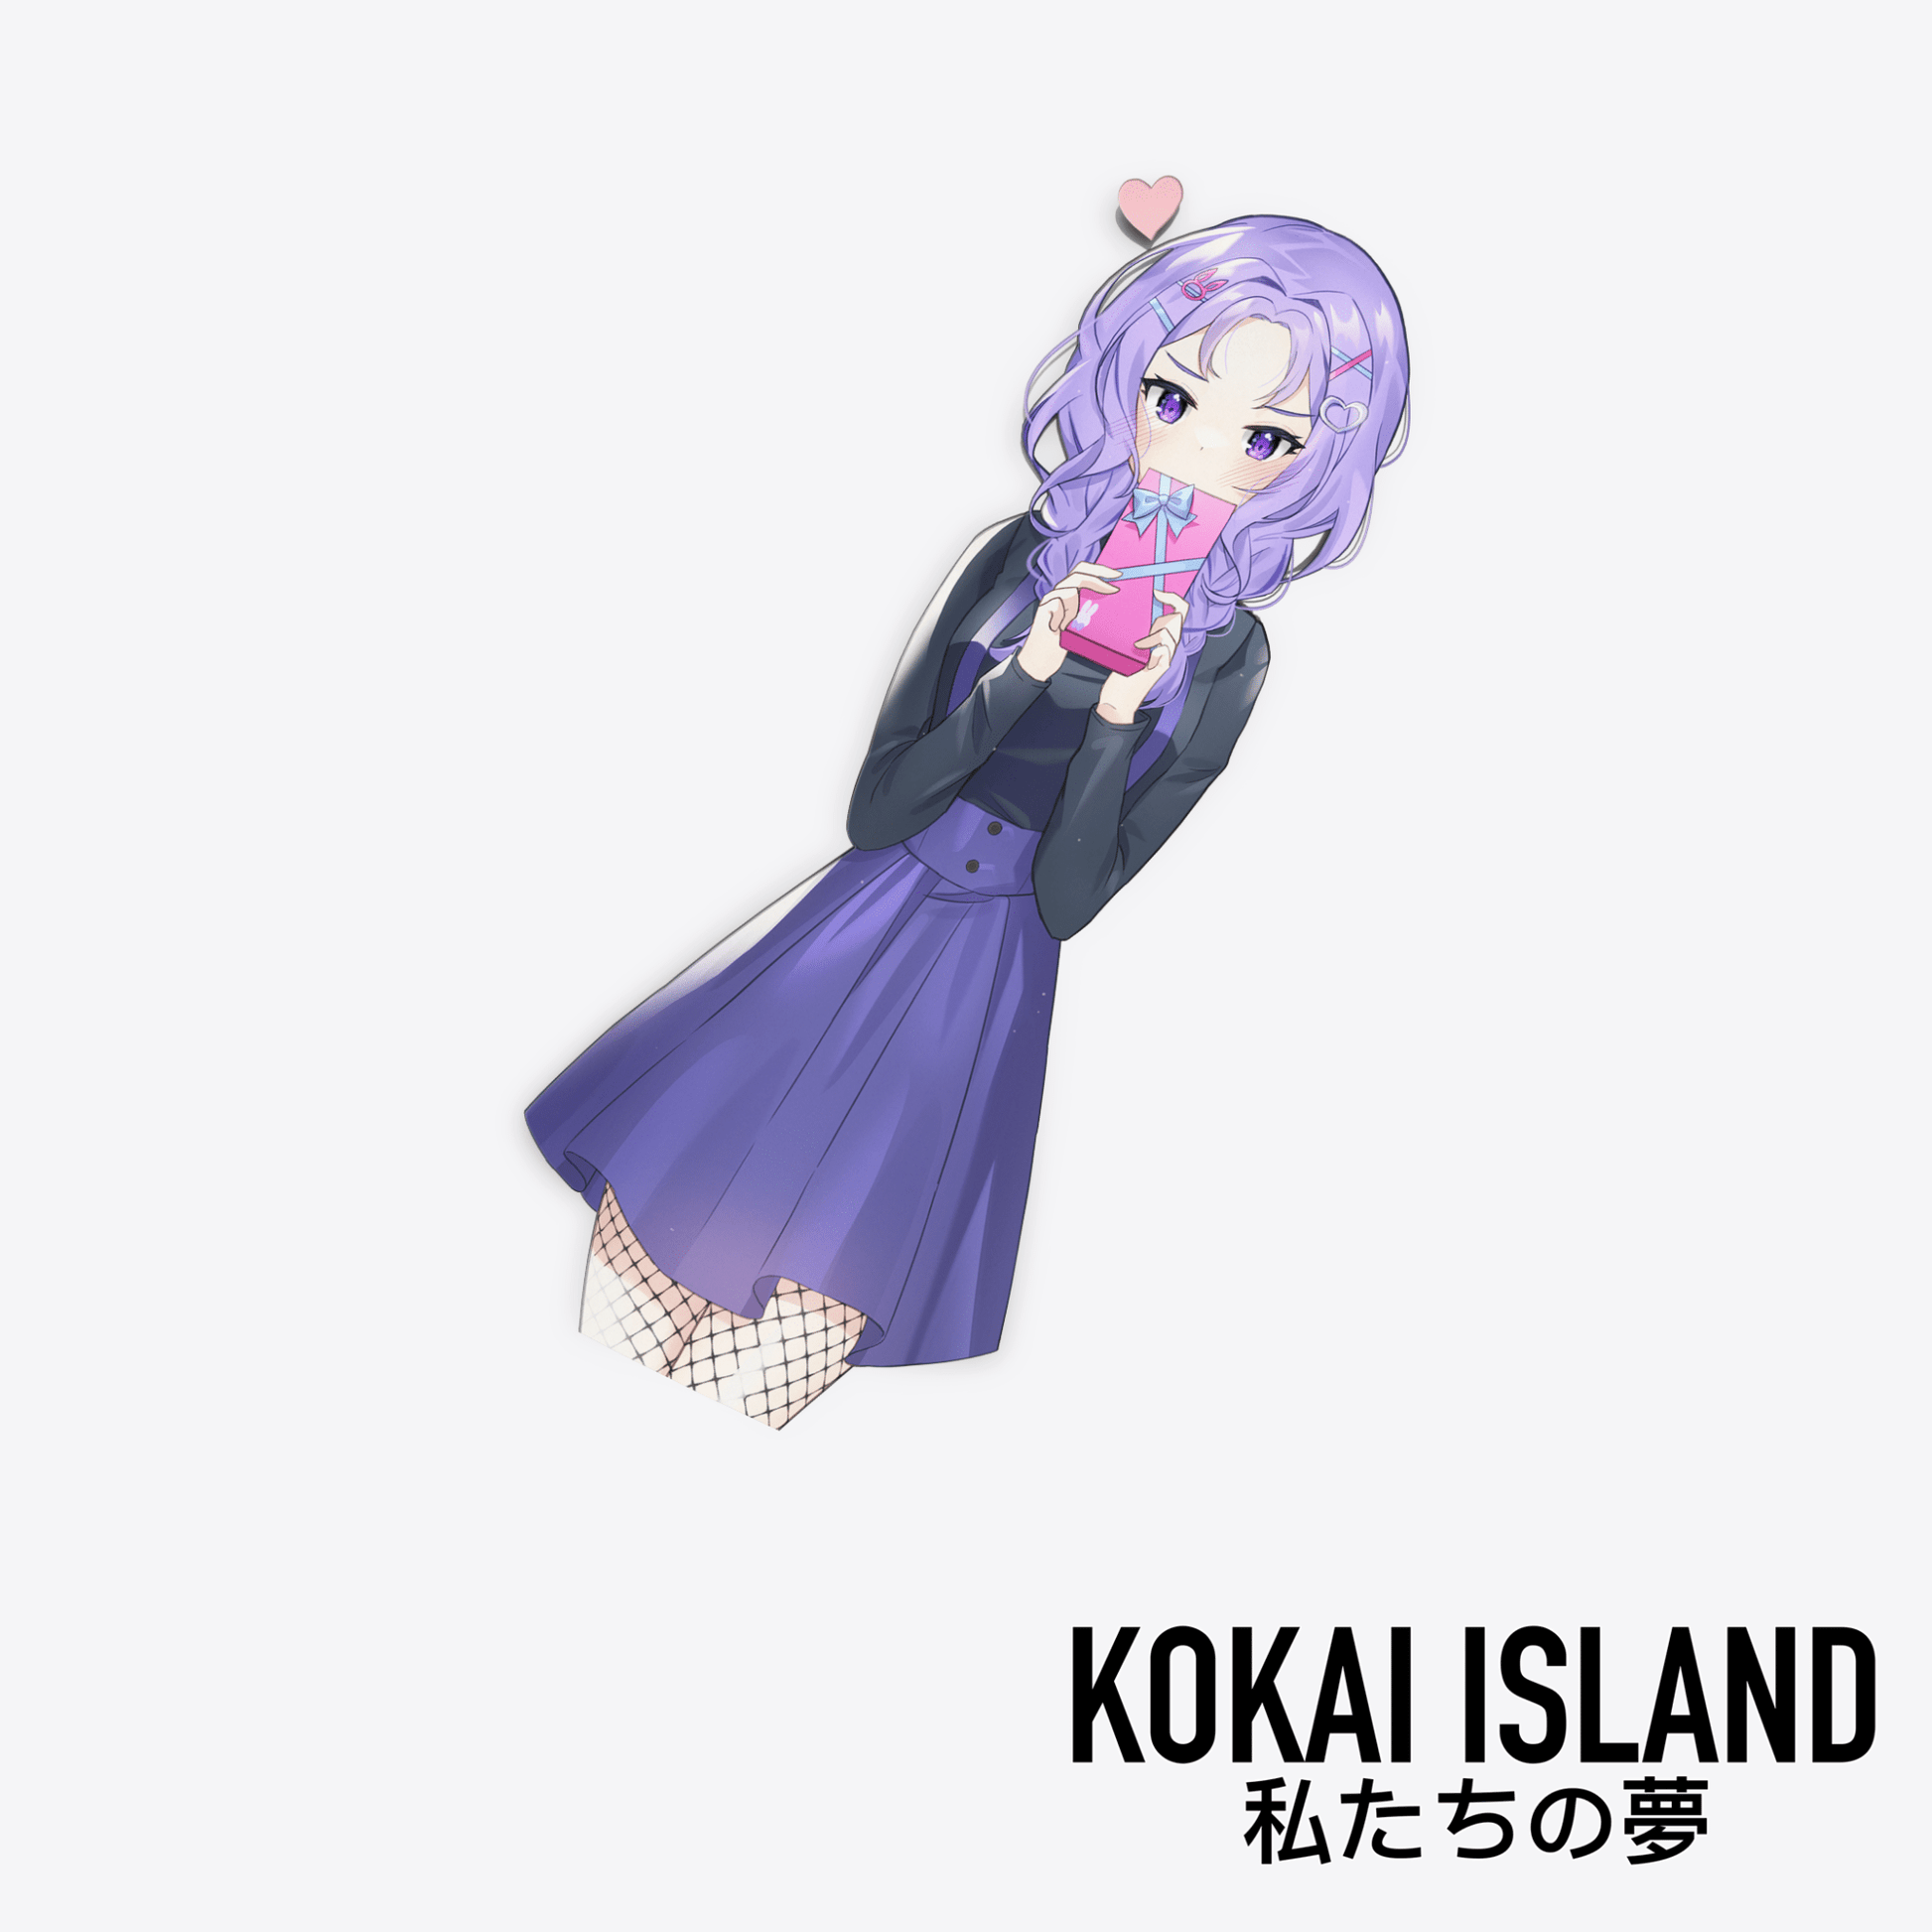 Koko V-Day DecalDecalKokai Island